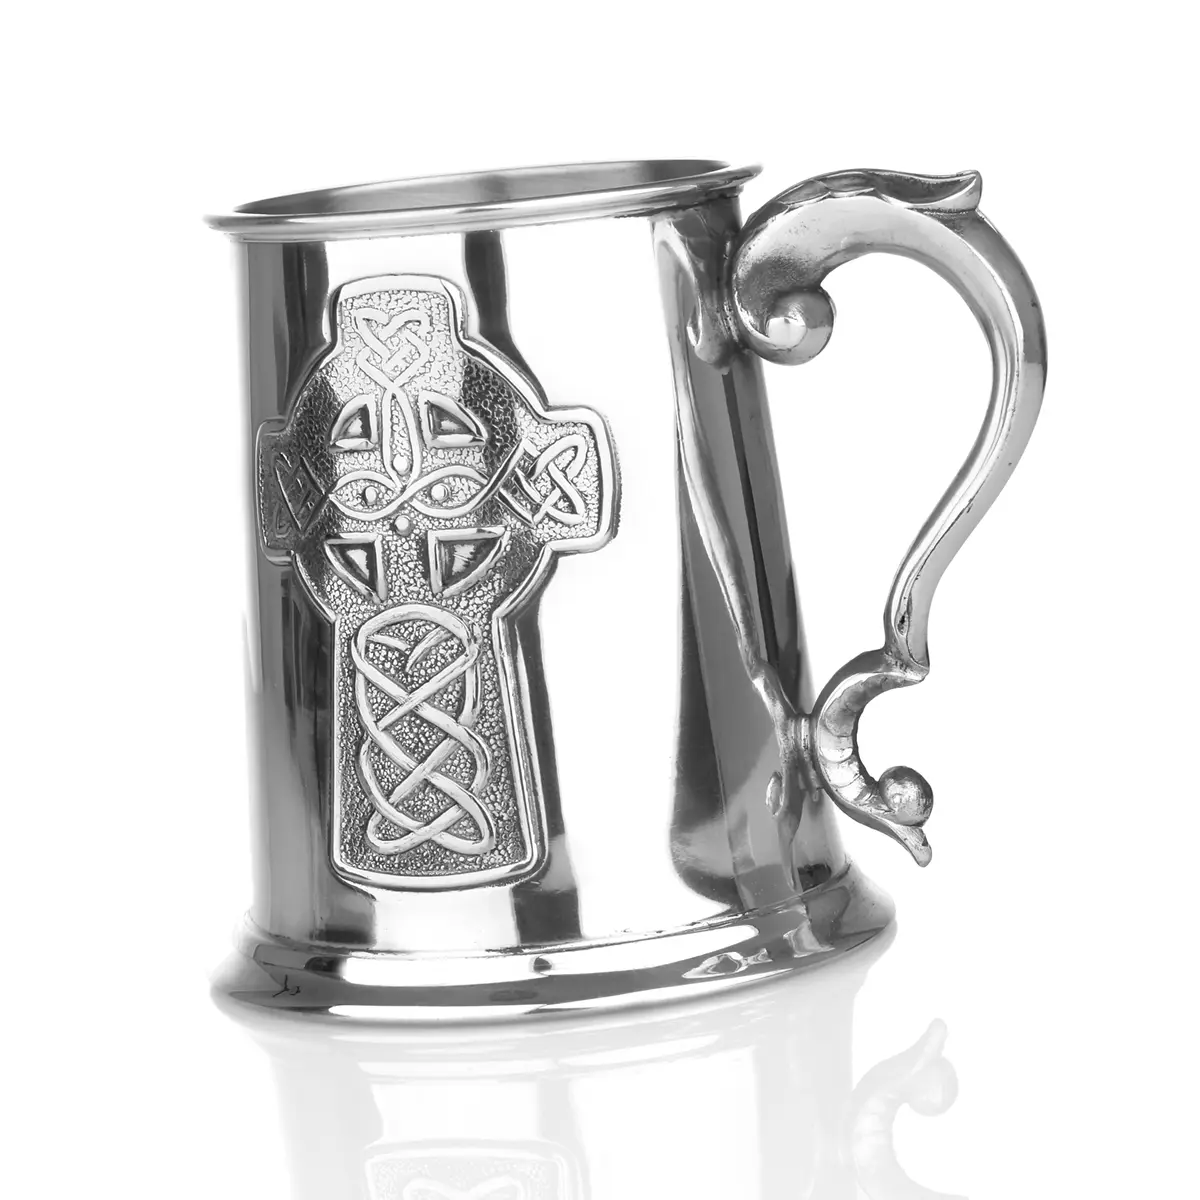 Medieval Celtic Cross Tankard - keltischer 1 Pint Mittelalter Bierkrug aus England